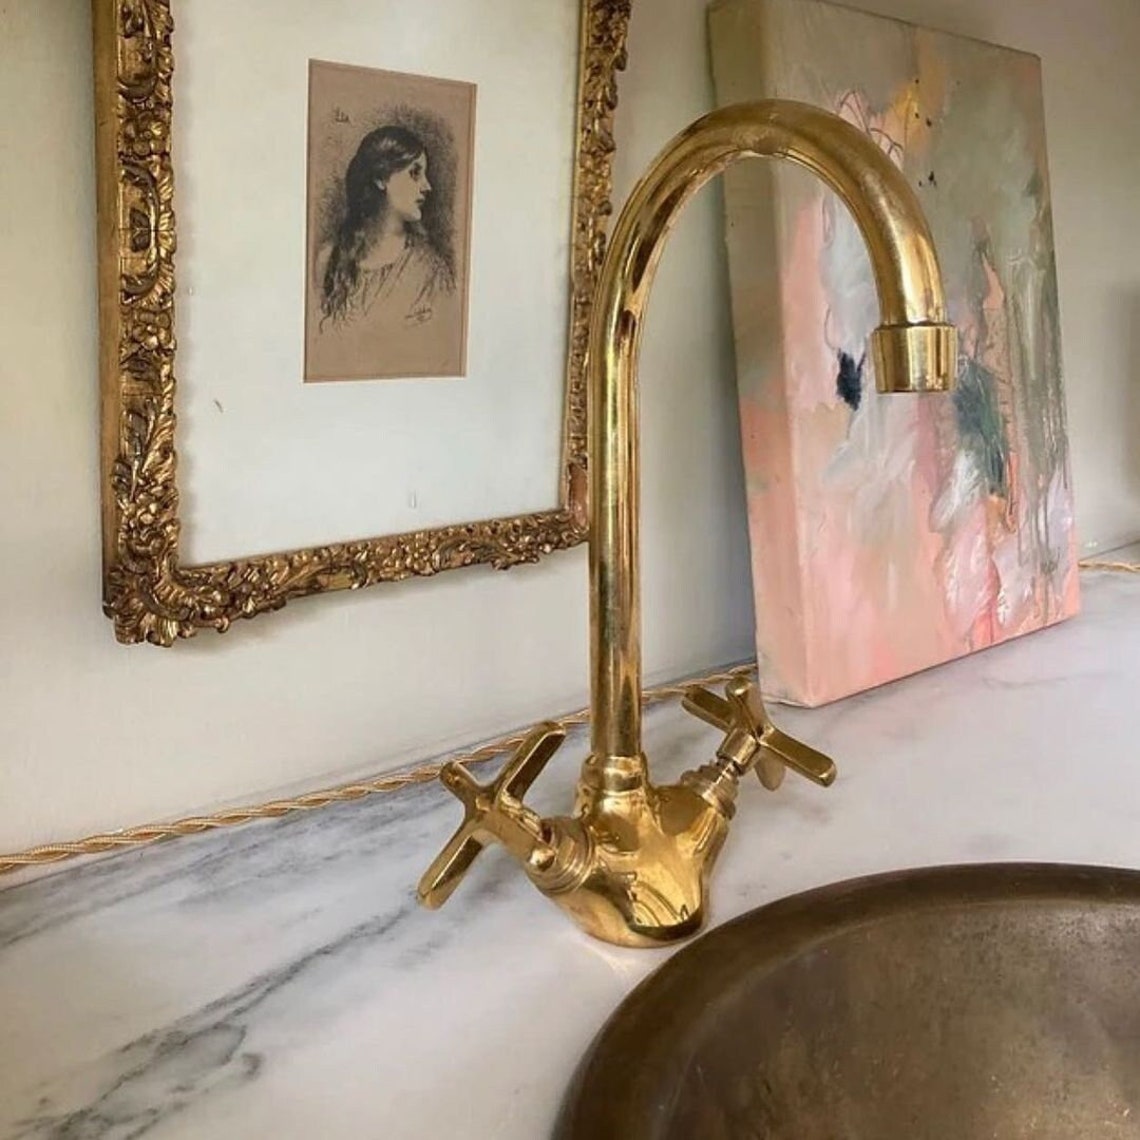 Gooseneck Bathroom Sink Faucet - Unlacquered Brass Faucet